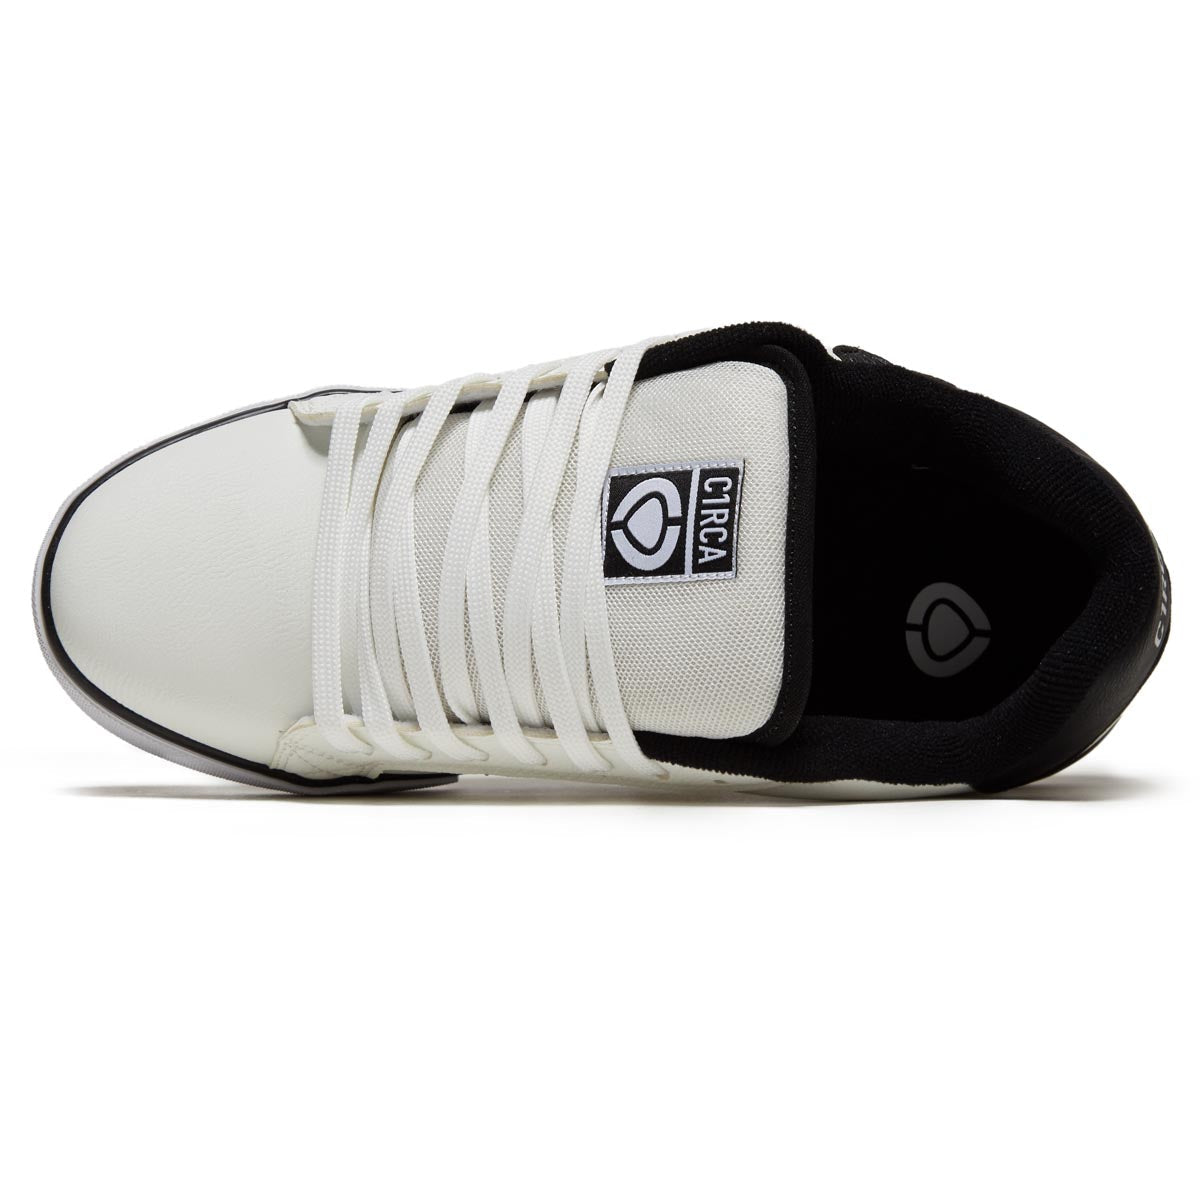 C1rca 211 Vulc Bold Shoes - White/Black image 3